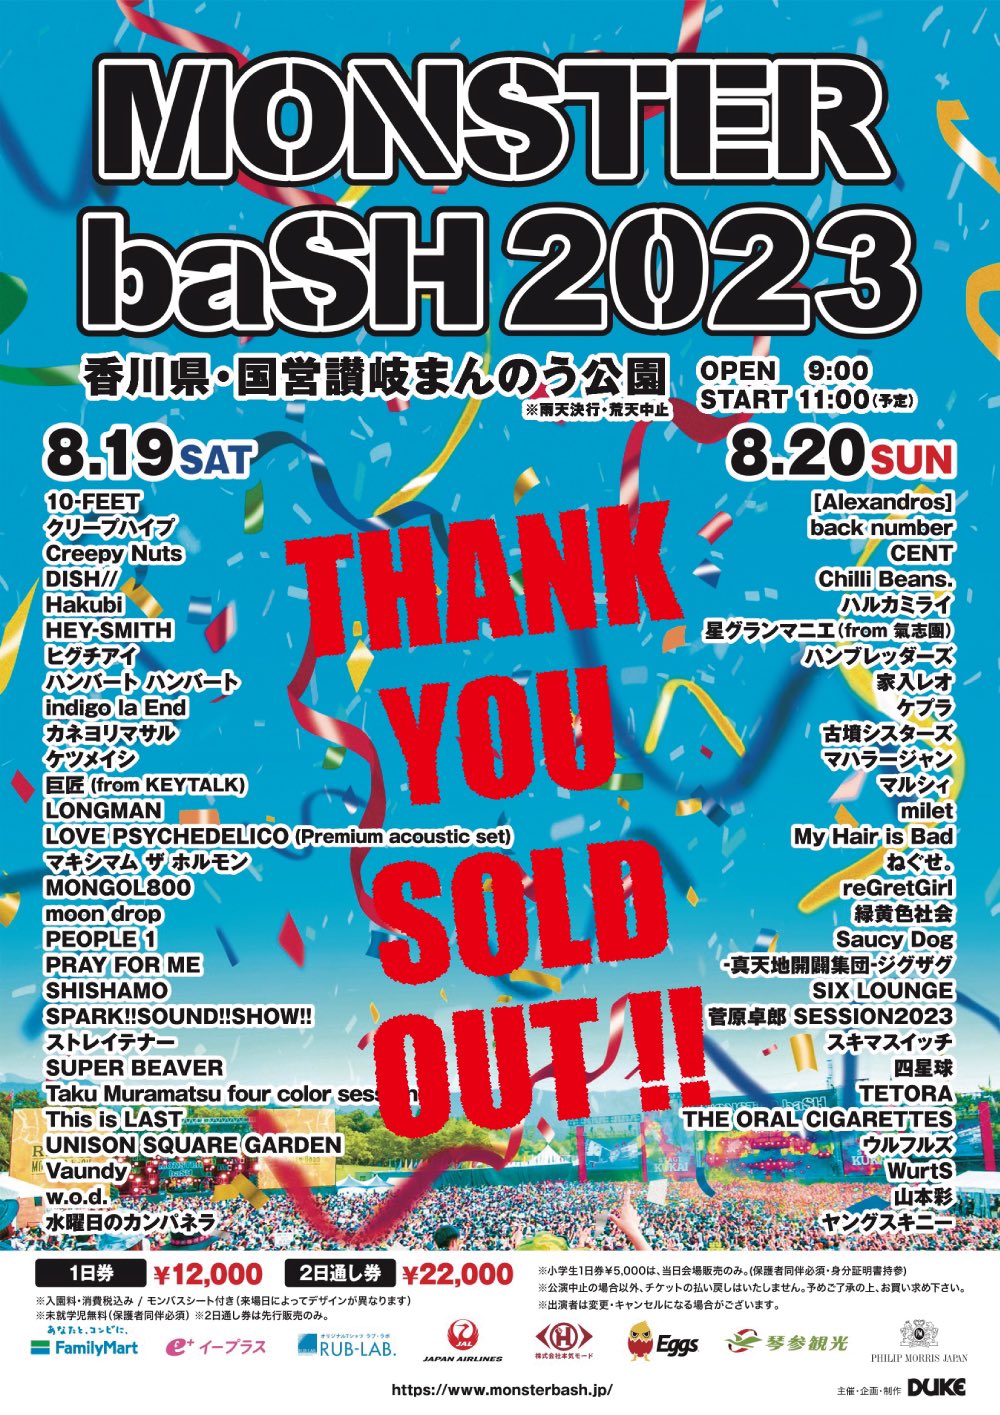 MONSTER baSH 2023 2日通し券-